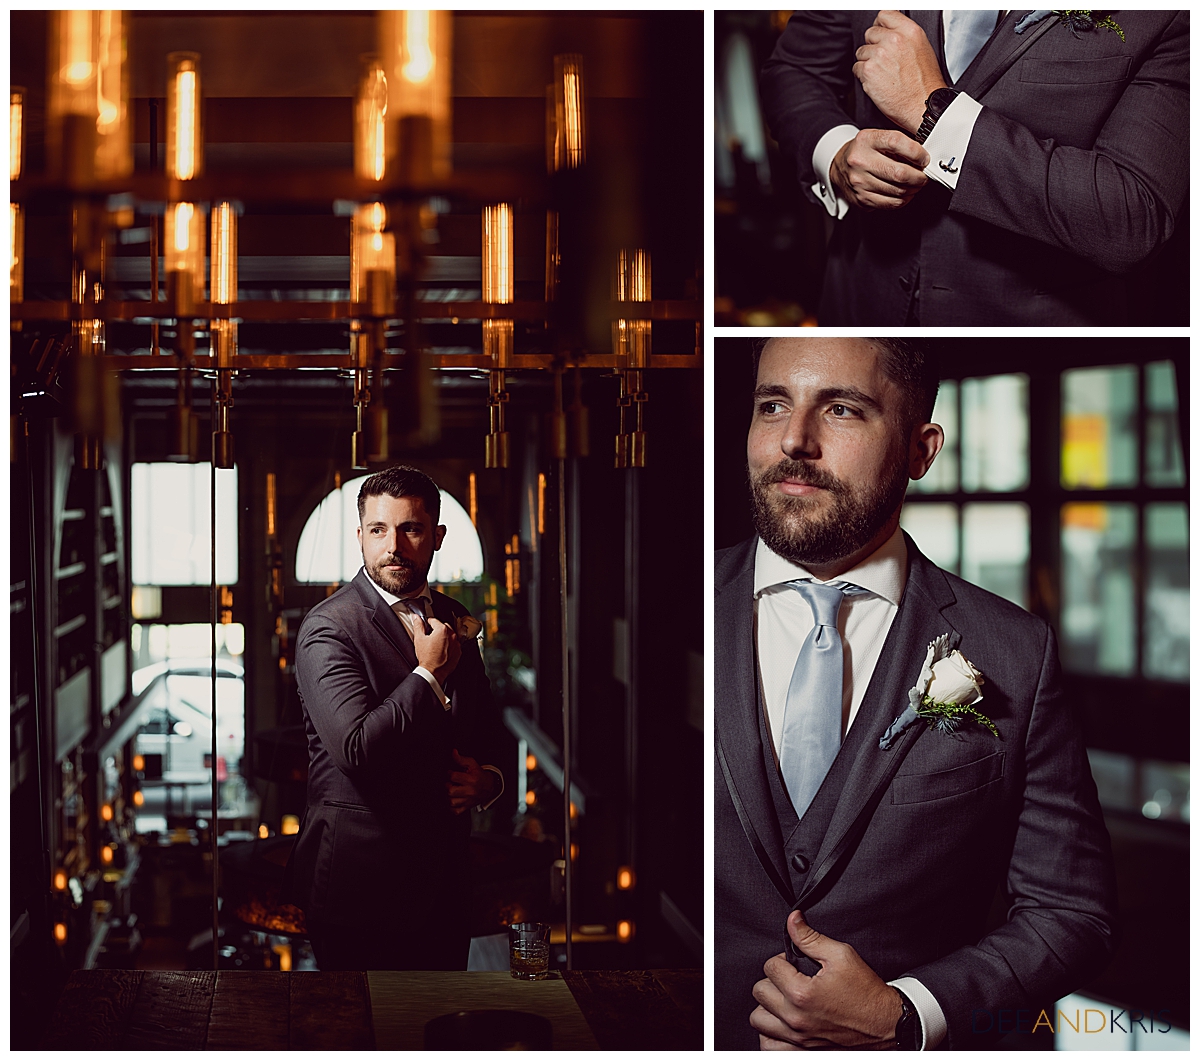 Three images of groom's tuxedo details.